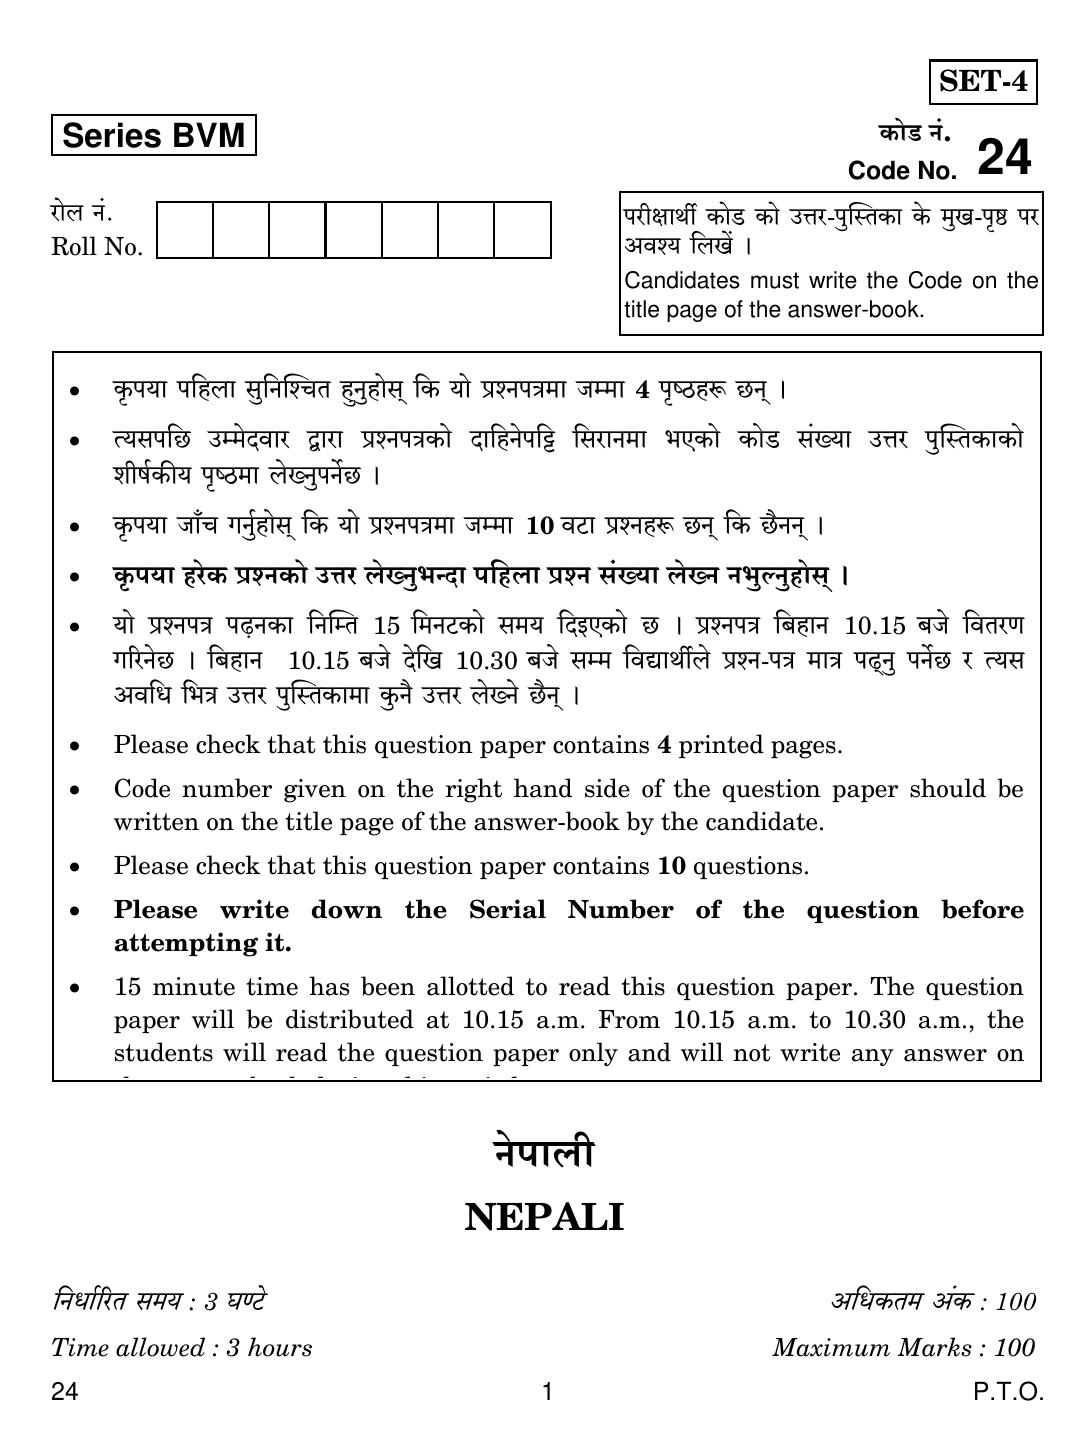 CBSE Class 12 24 Nepali 2019 Question Paper - Page 1